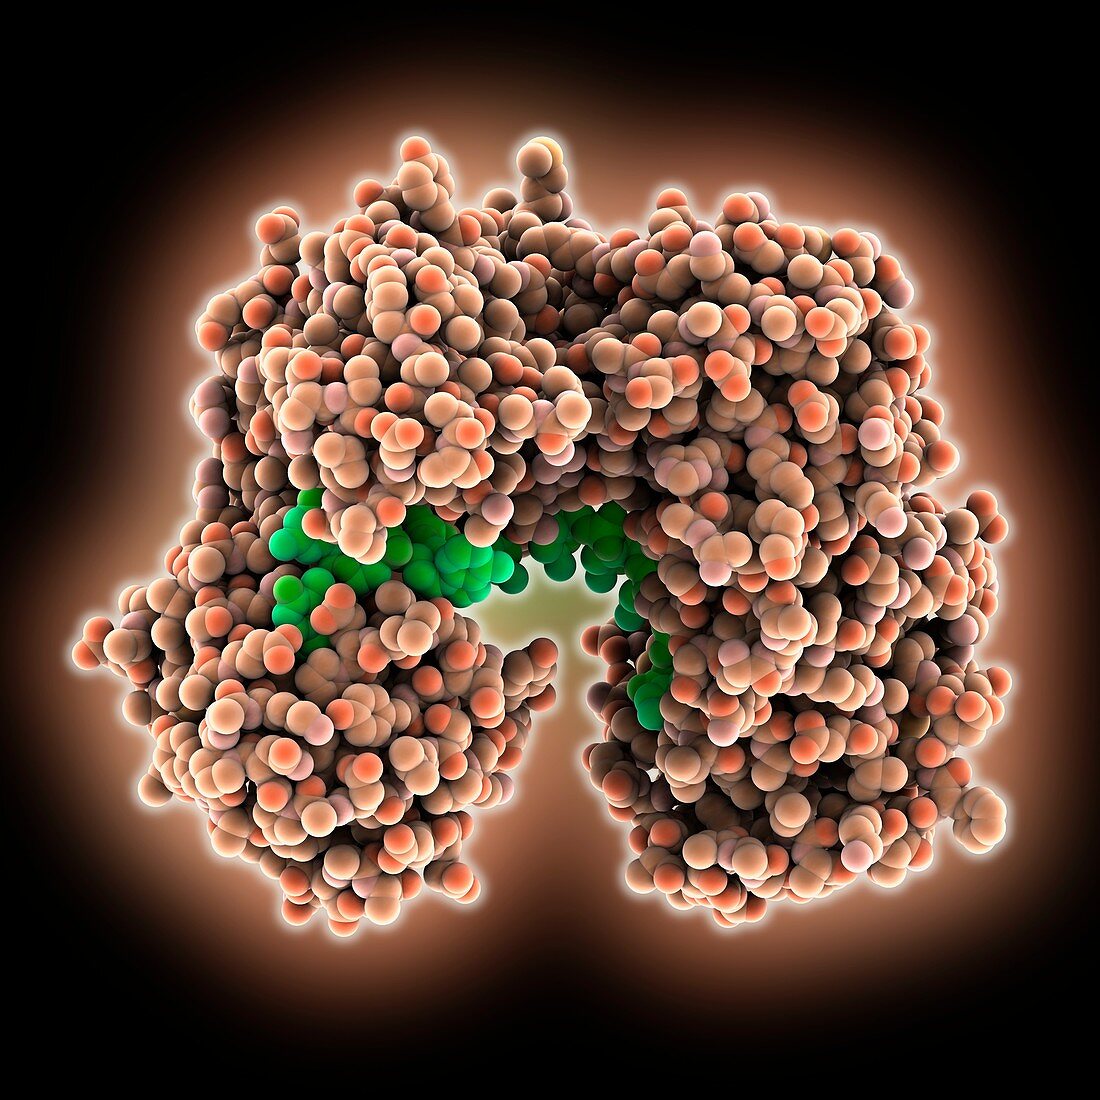 Argonaute protein with guide DNA, molecular model